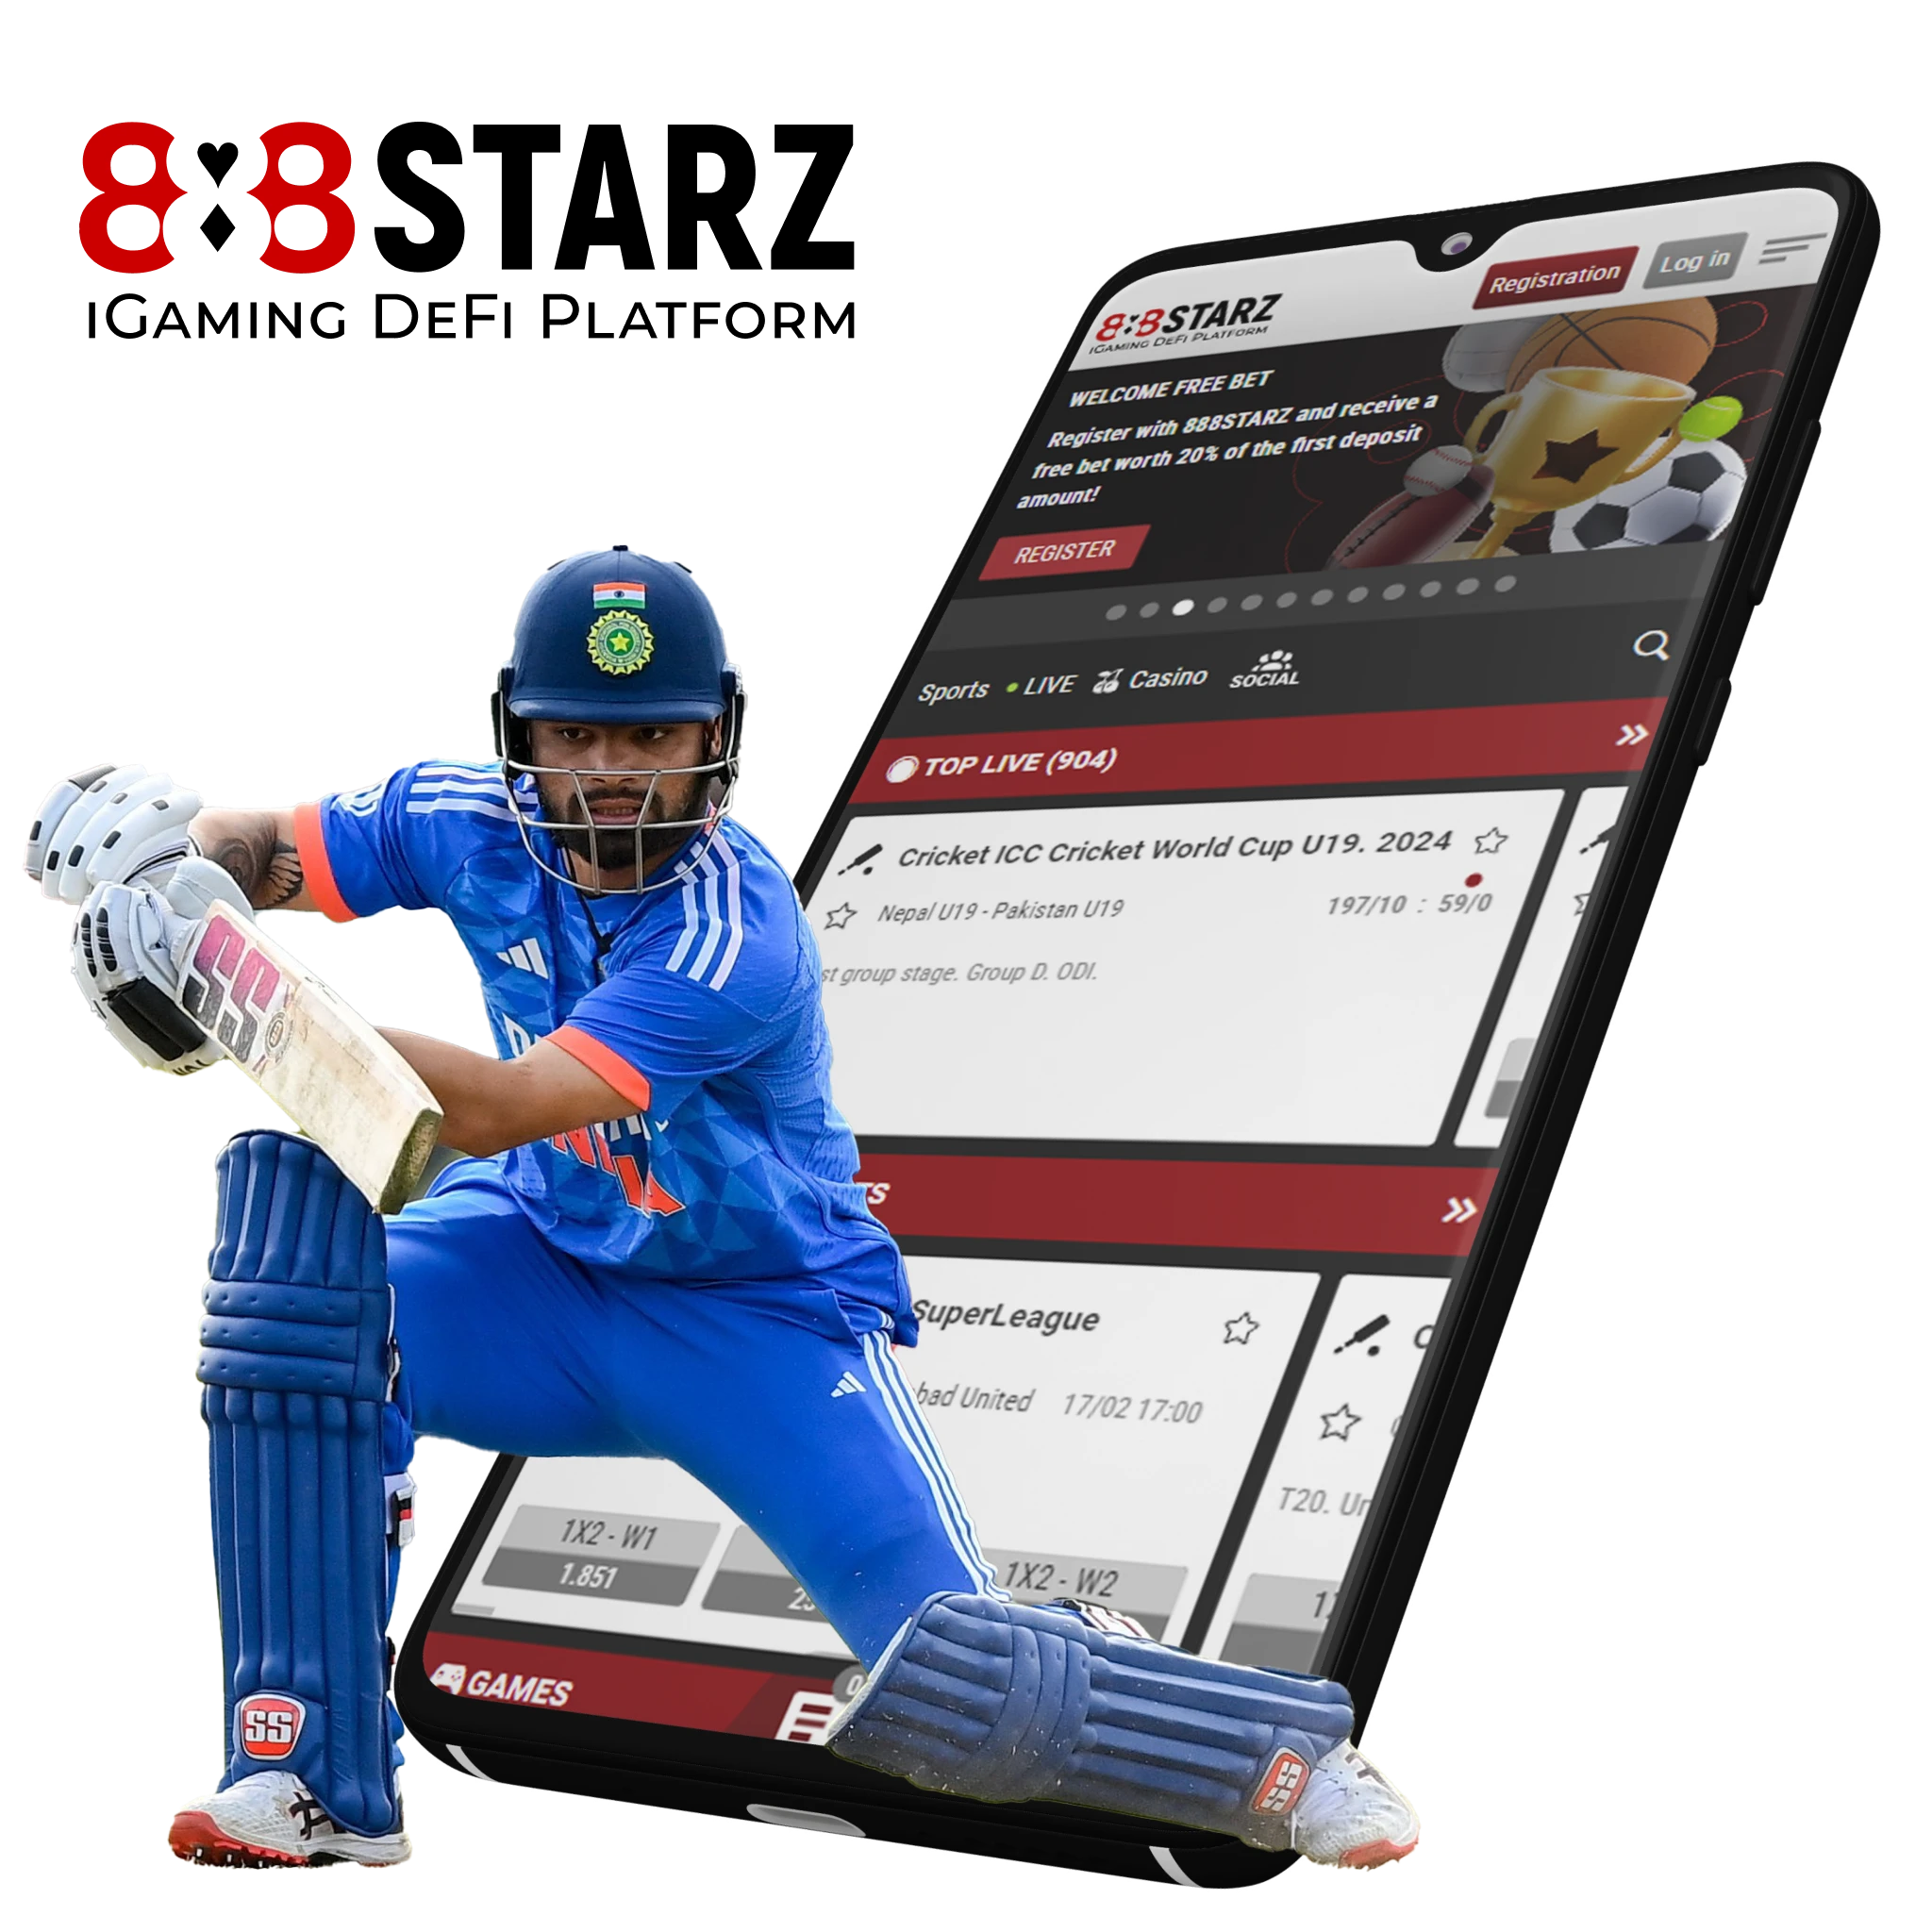 888starz IPL app.